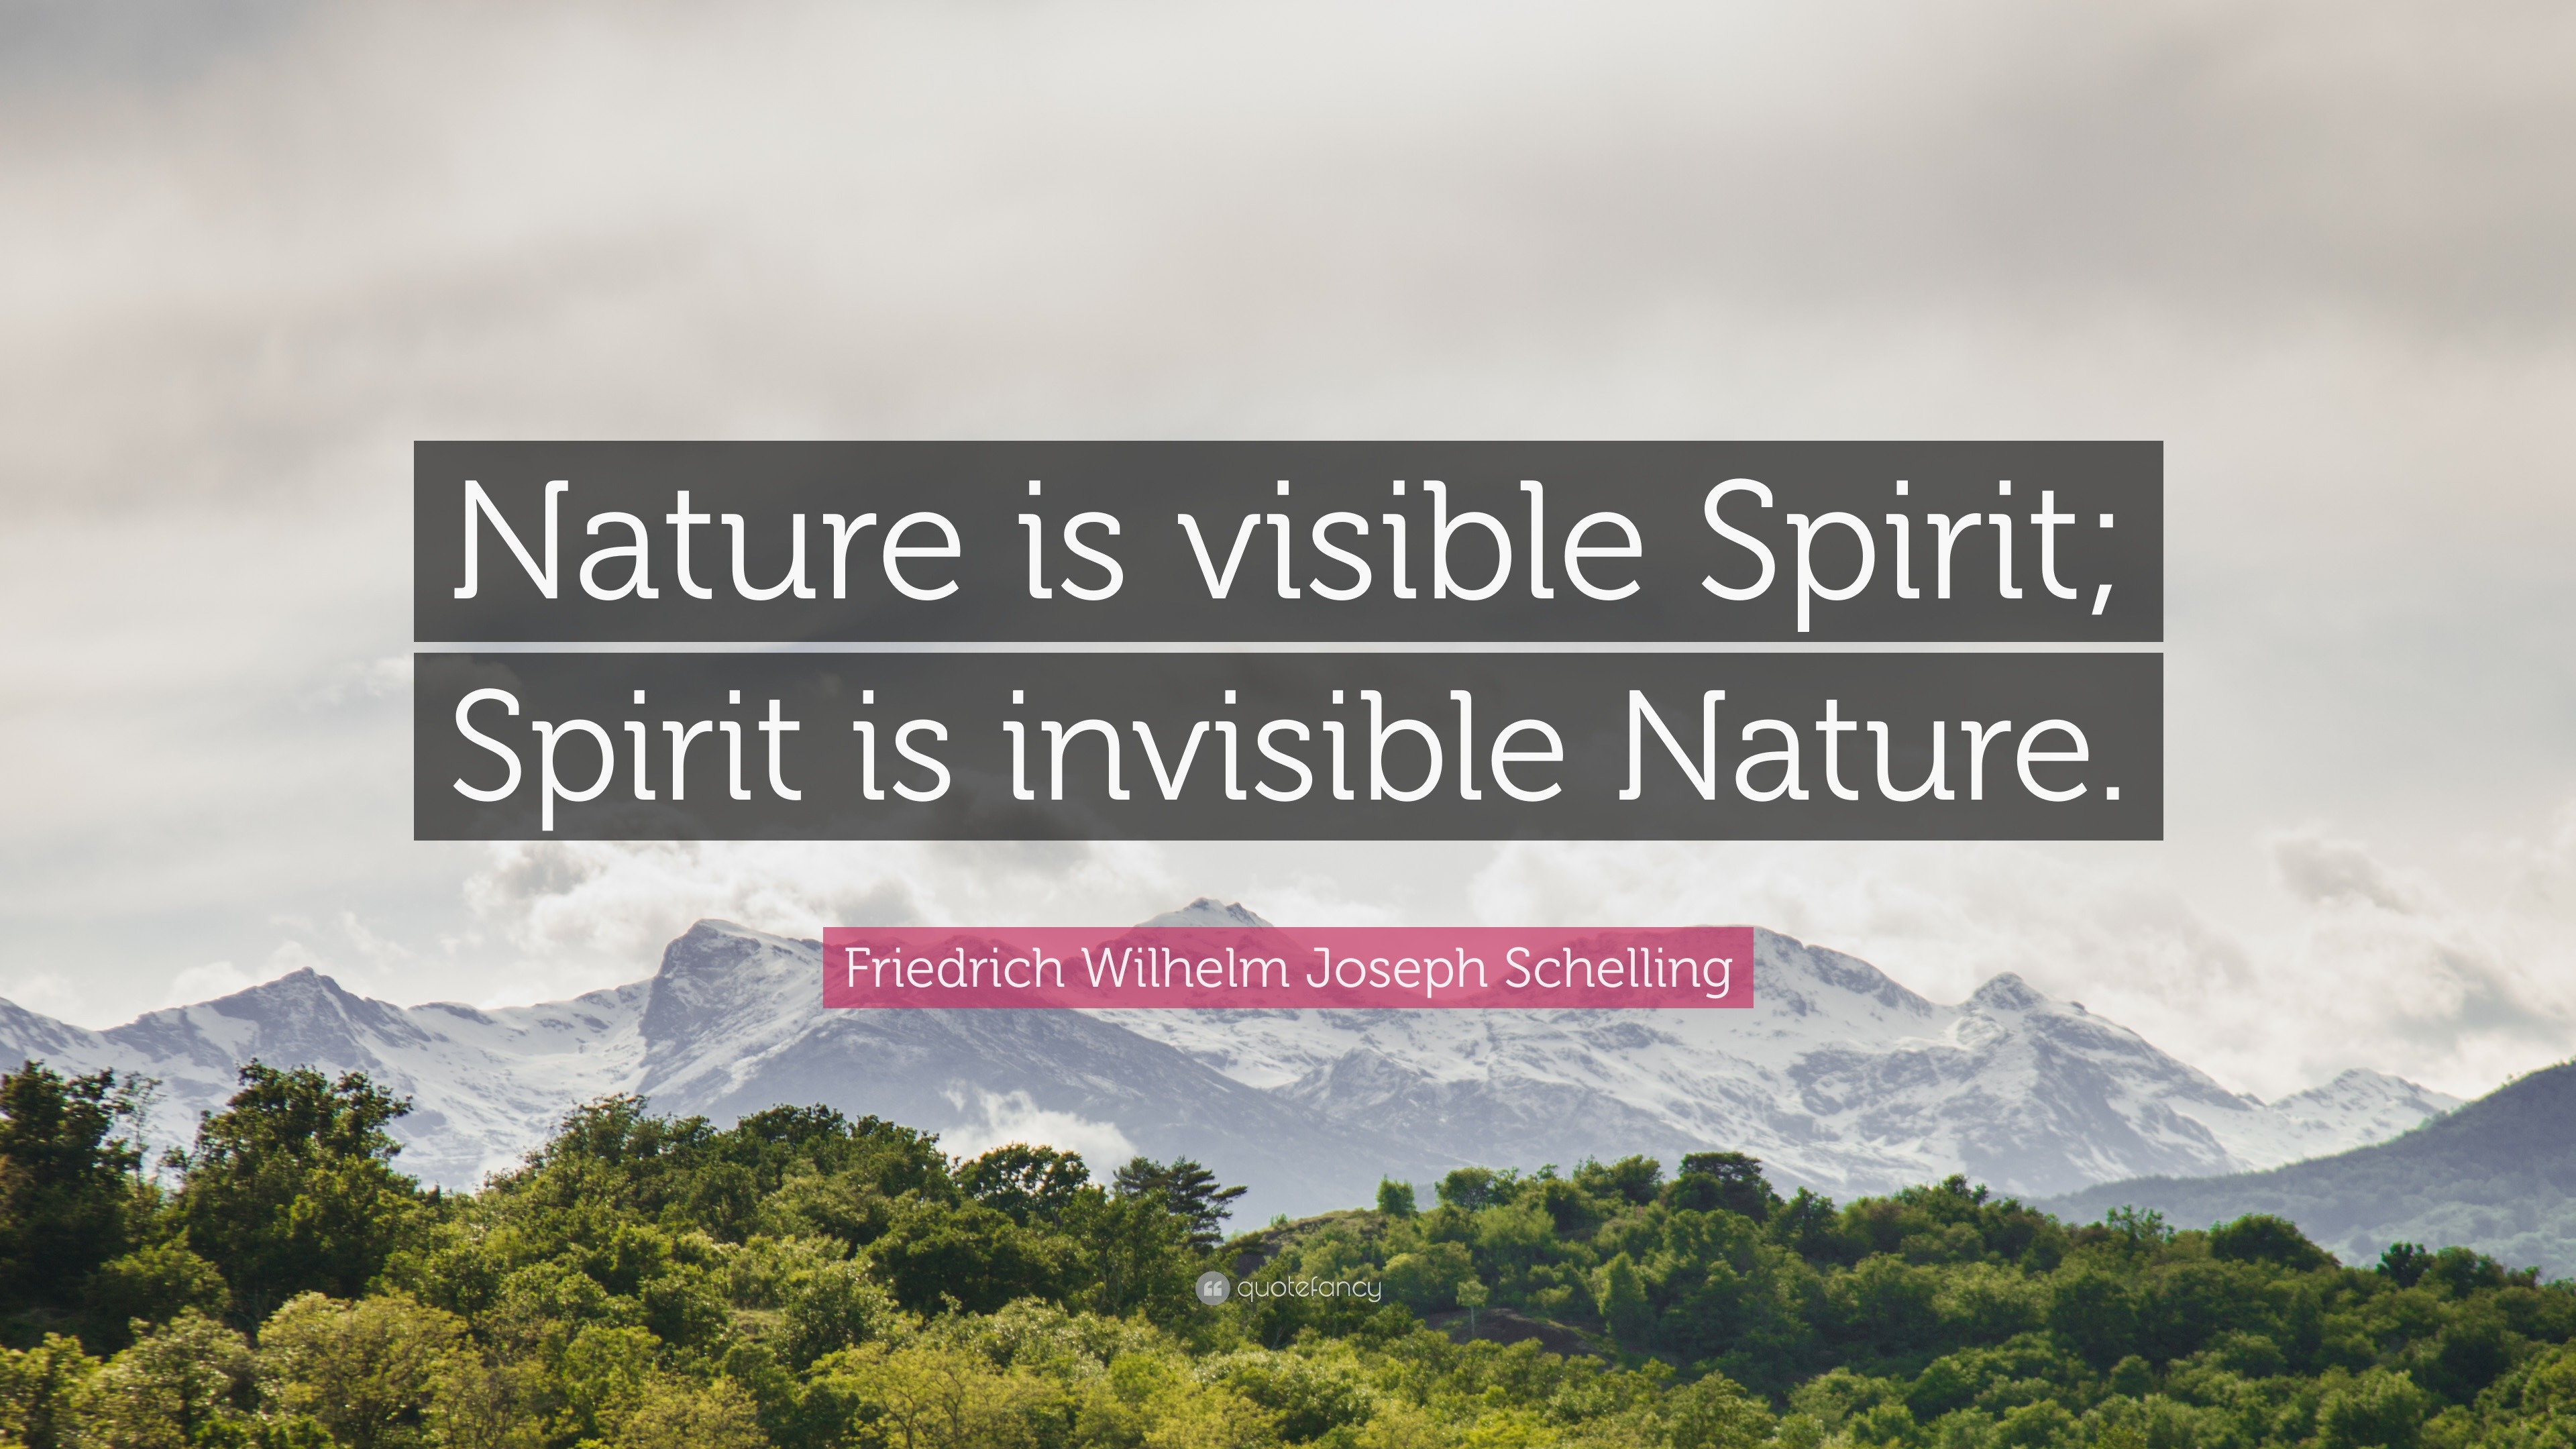 Friedrich Wilhelm Joseph Schelling Quote: “Nature is visible Spirit; Spirit  is invisible Nature.”